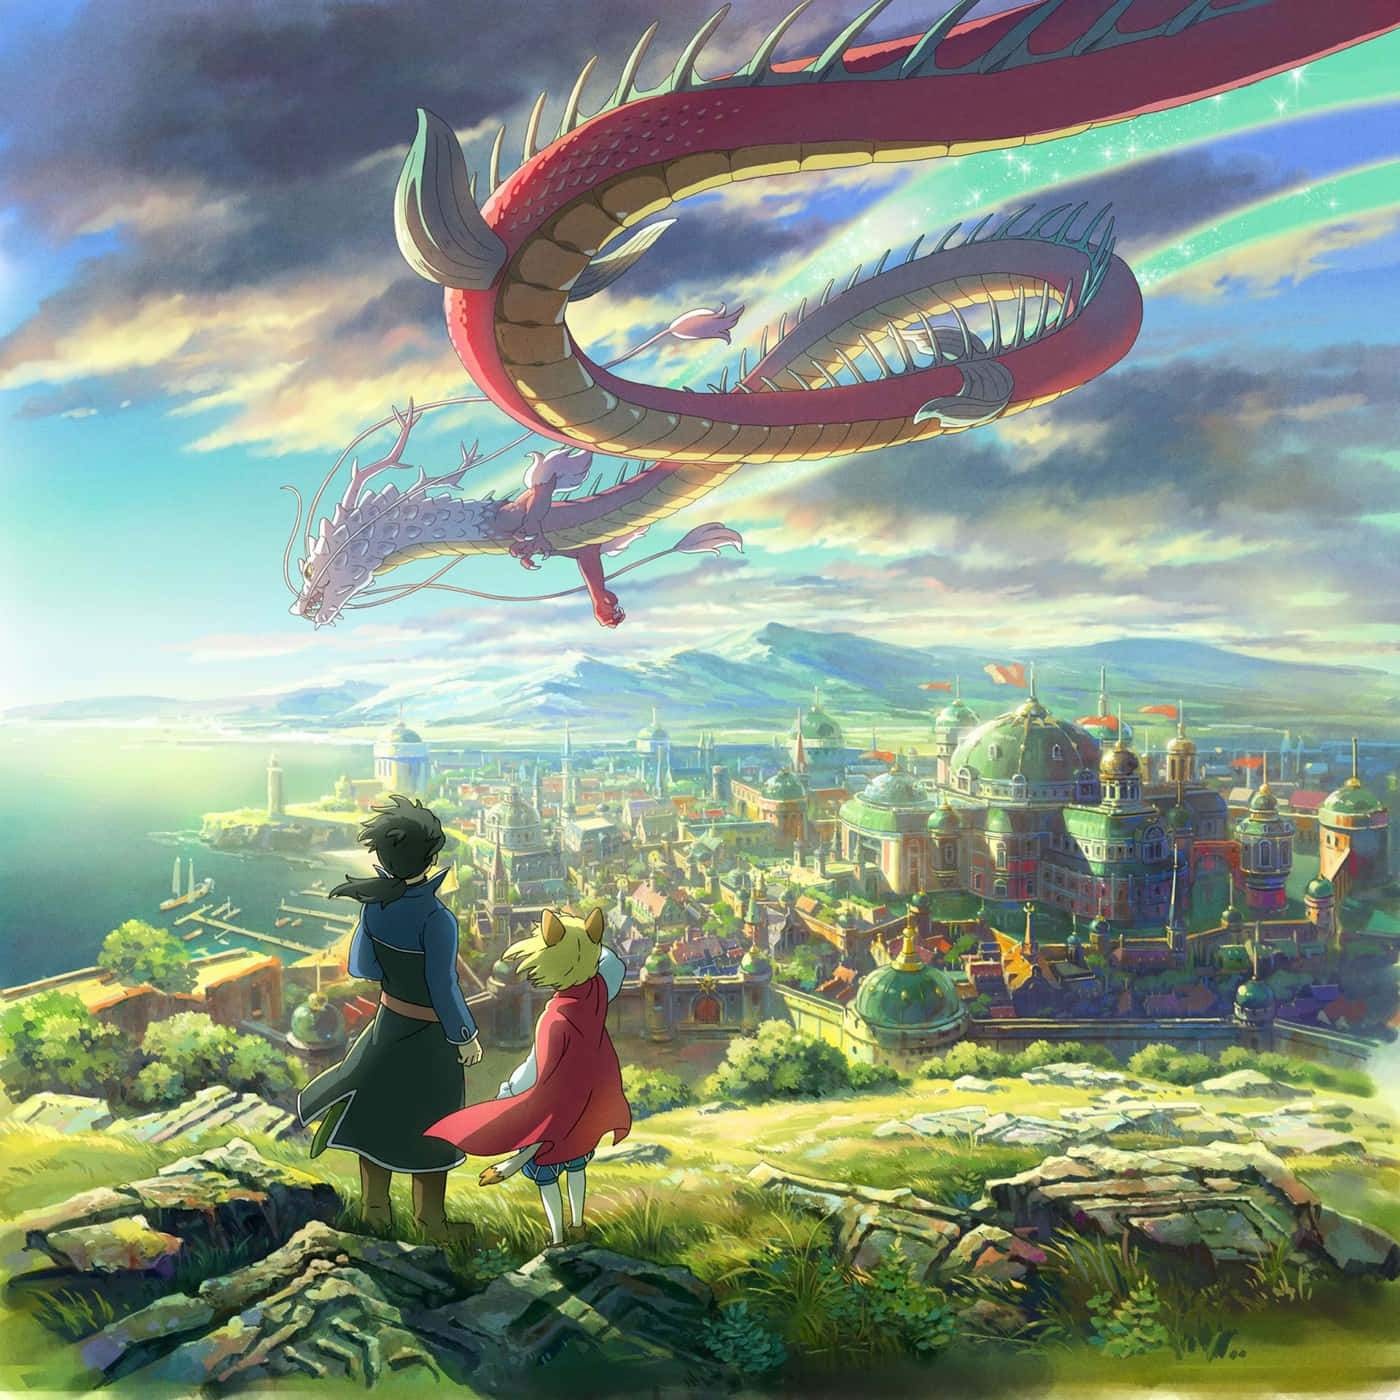 Enchanting Scenery in Studio Ghibli Art Wallpaper